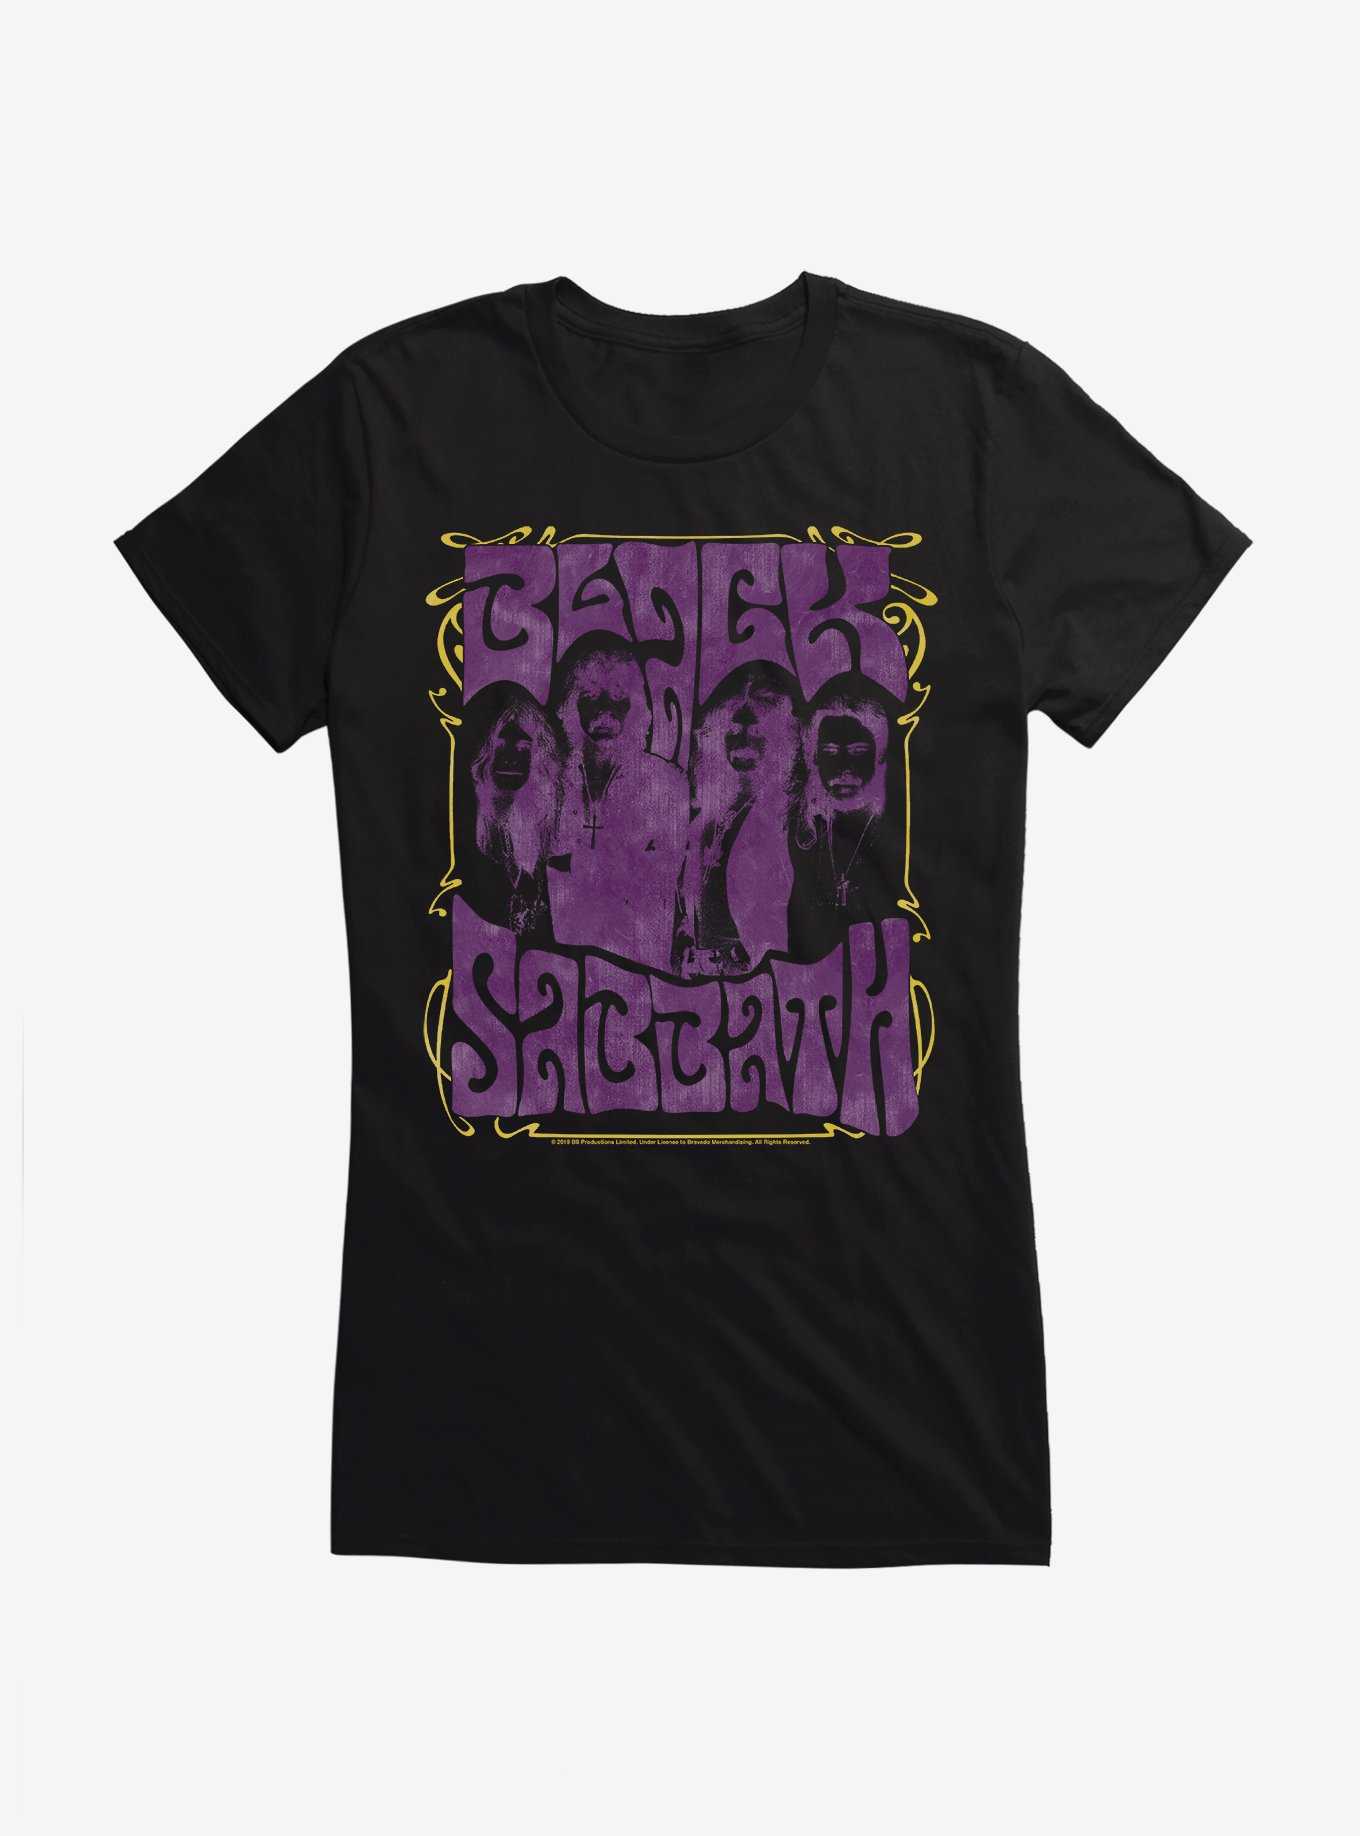 Black Sabbath Groovy Group Girls T-Shirt, , hi-res